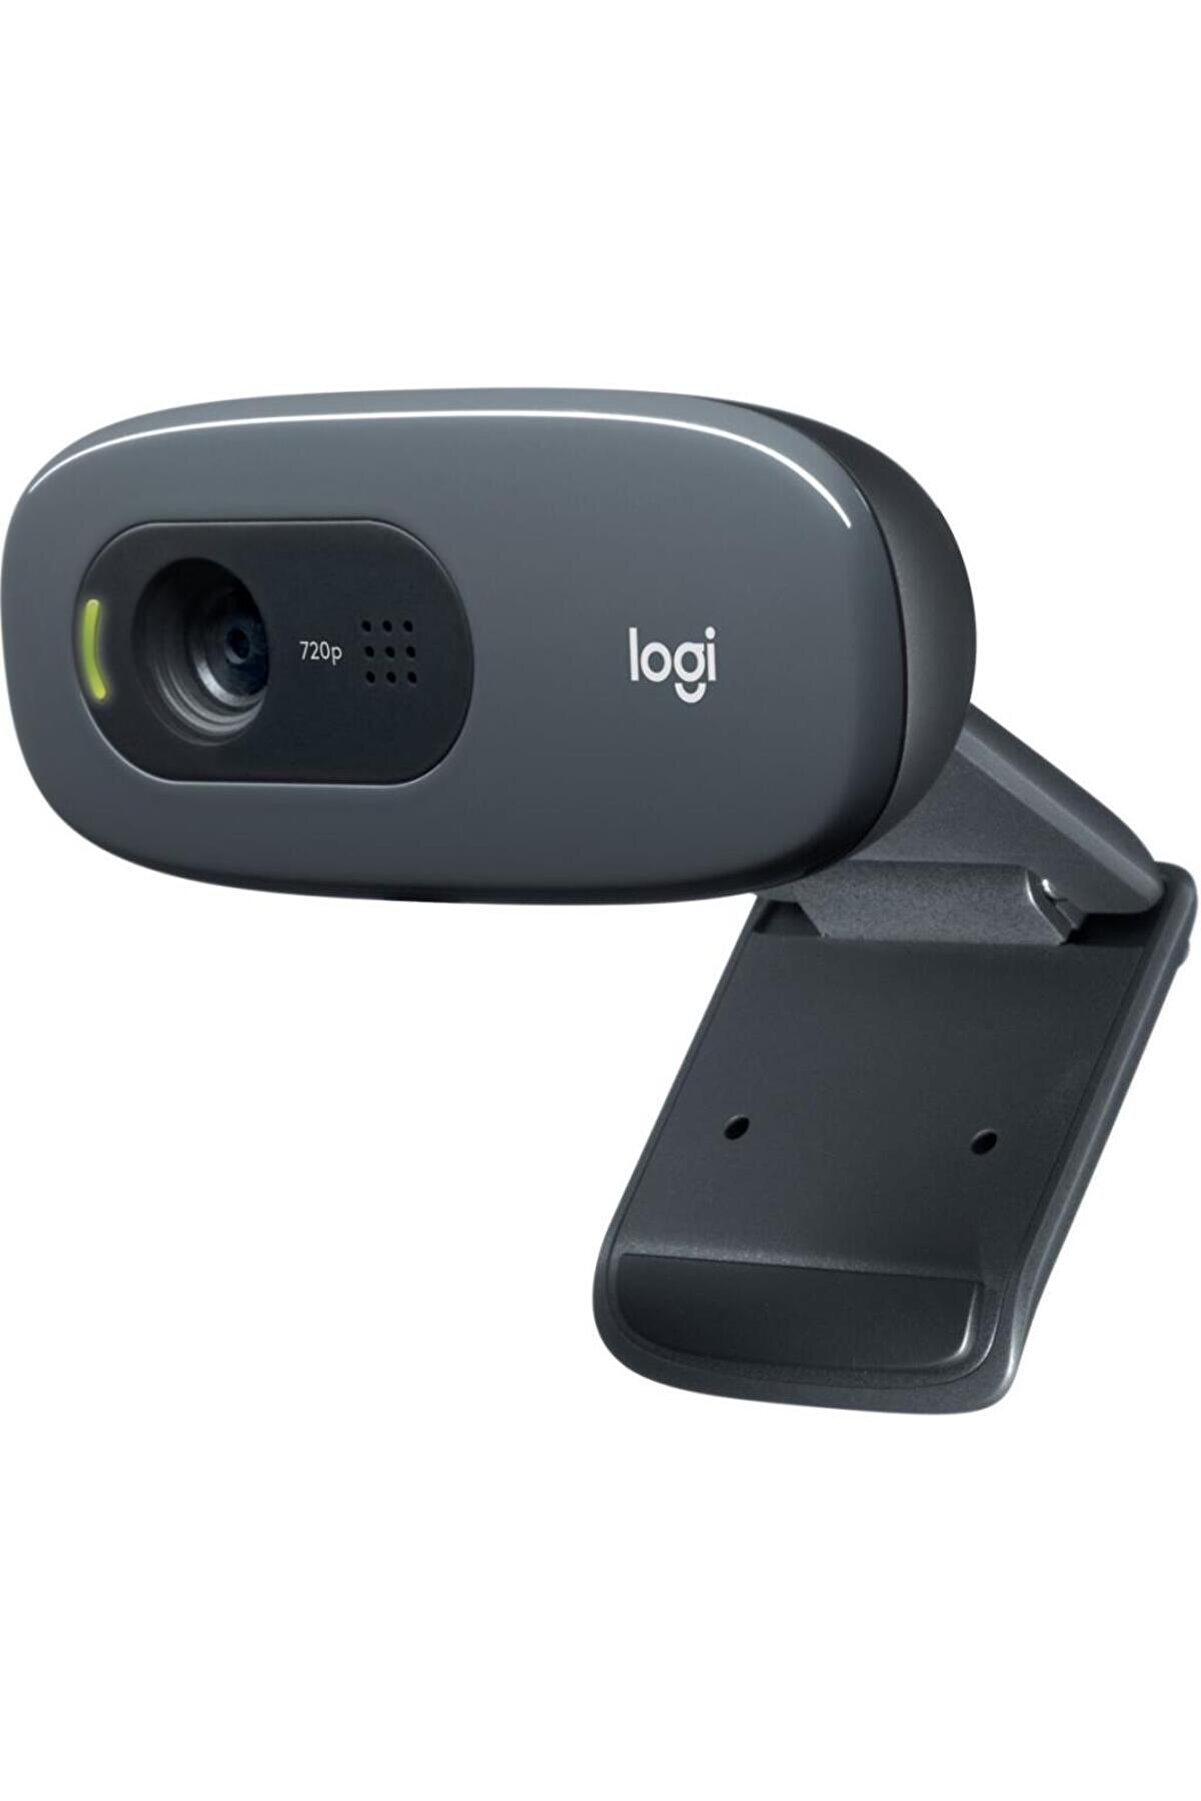 logitech C270 HD 720p Mikrofonlu Web Kamerası - Siyah